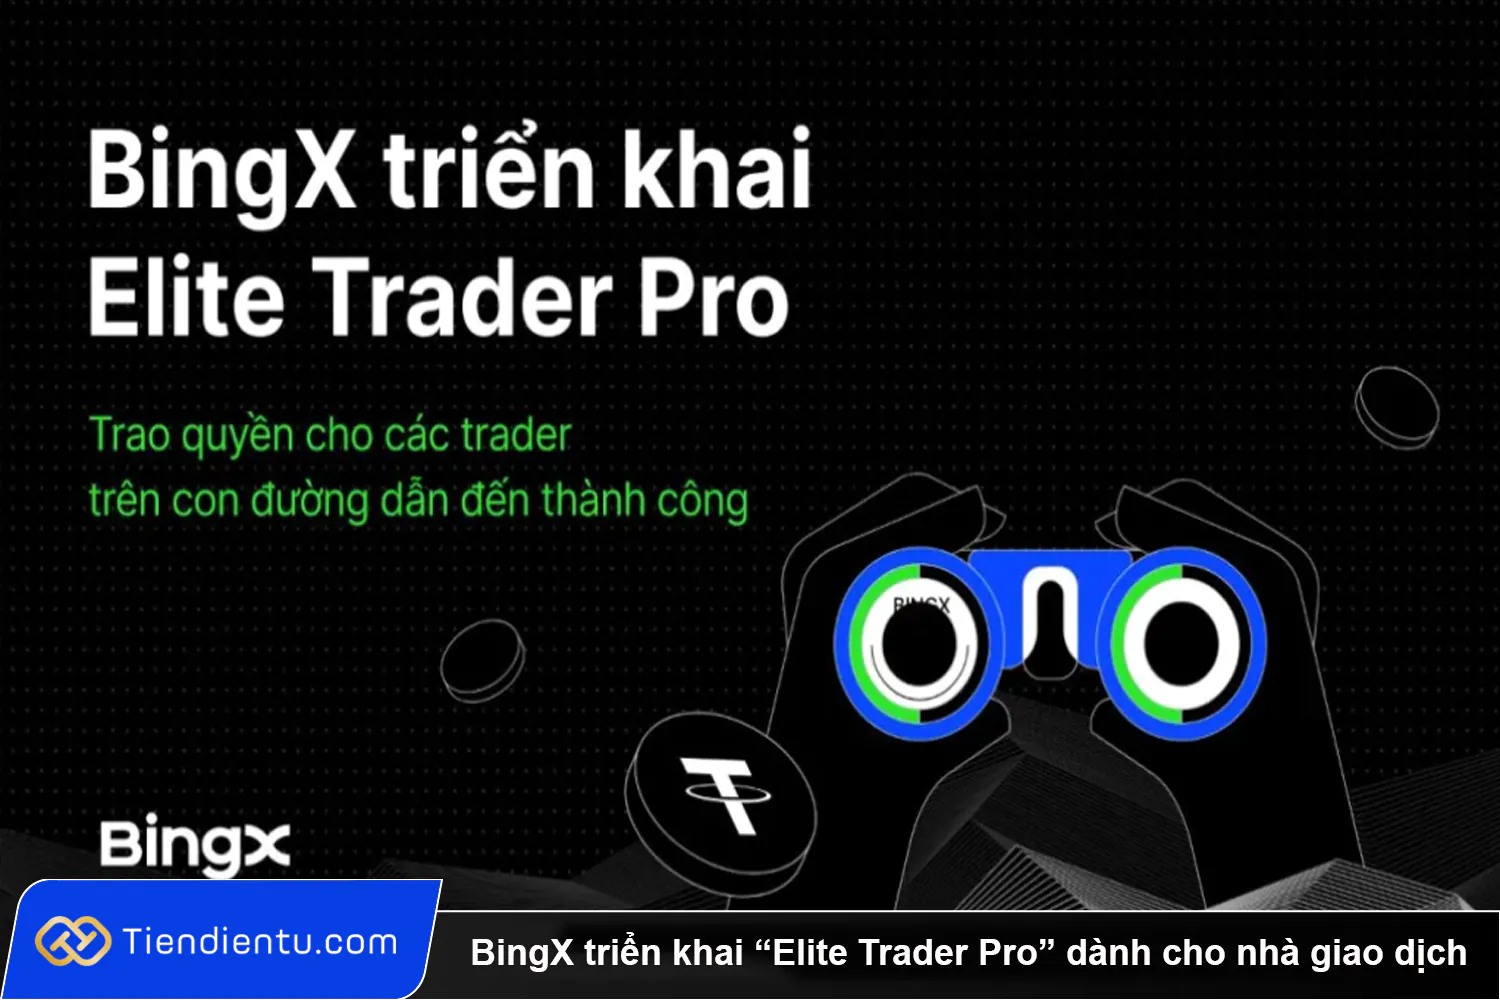 BingX trien khai Elite Trader Pro danh cho nha giao dich